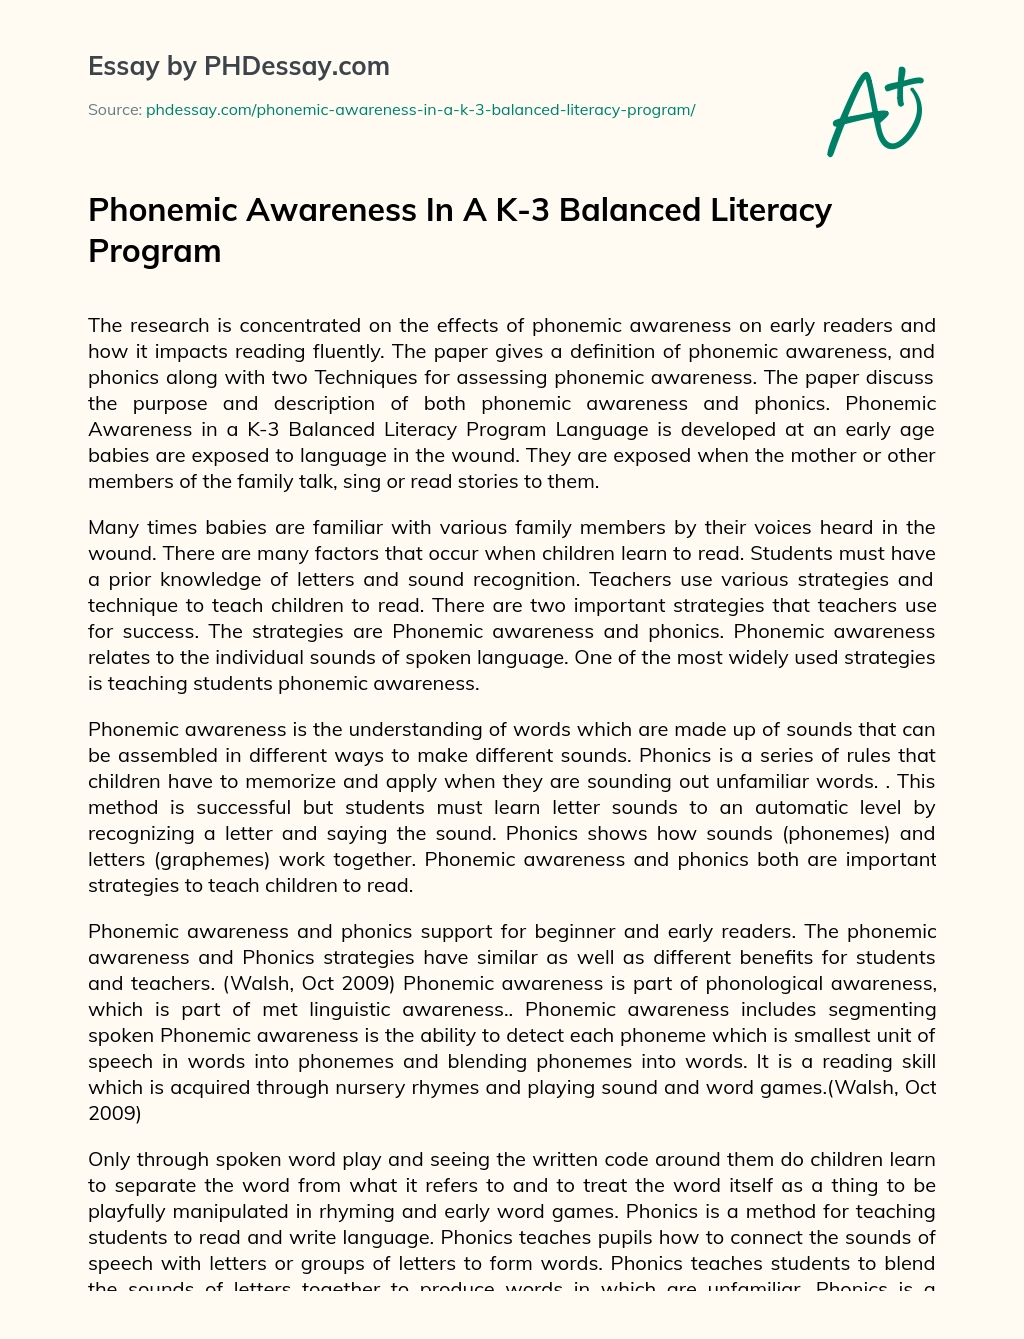 Phonemic Awareness In A K-3 Balanced Literacy Program essay